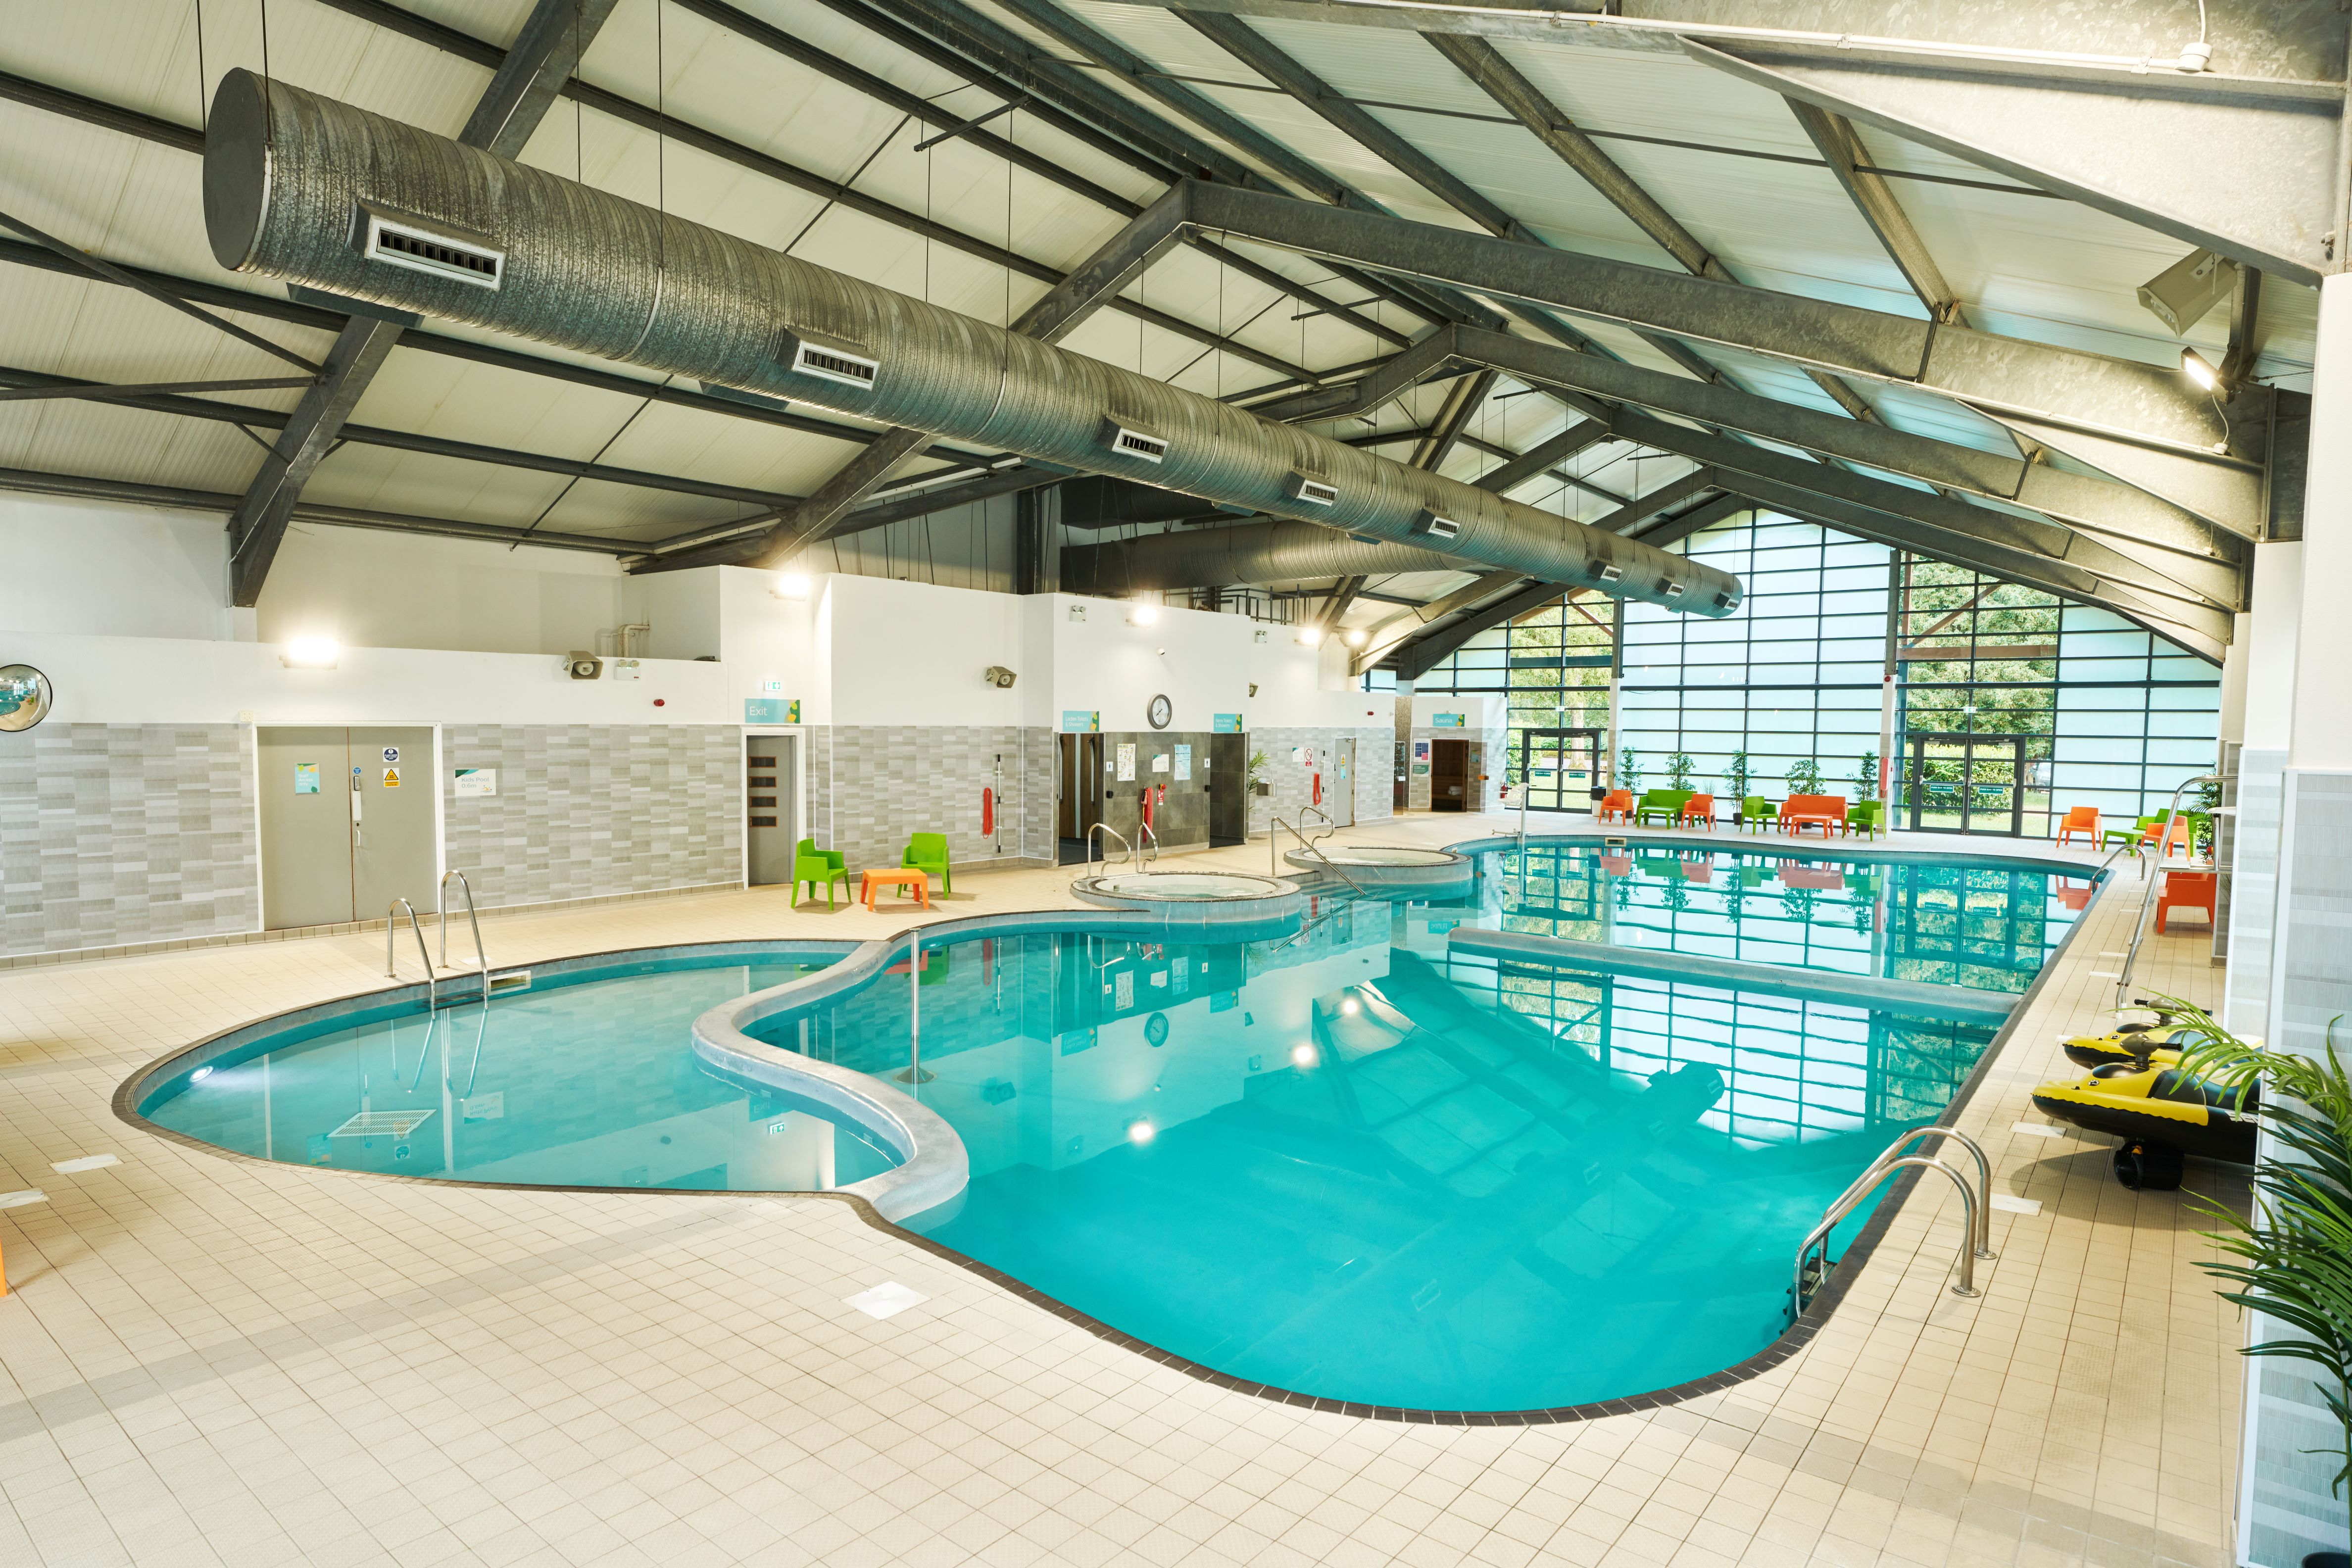 Pool & Gym Facilities